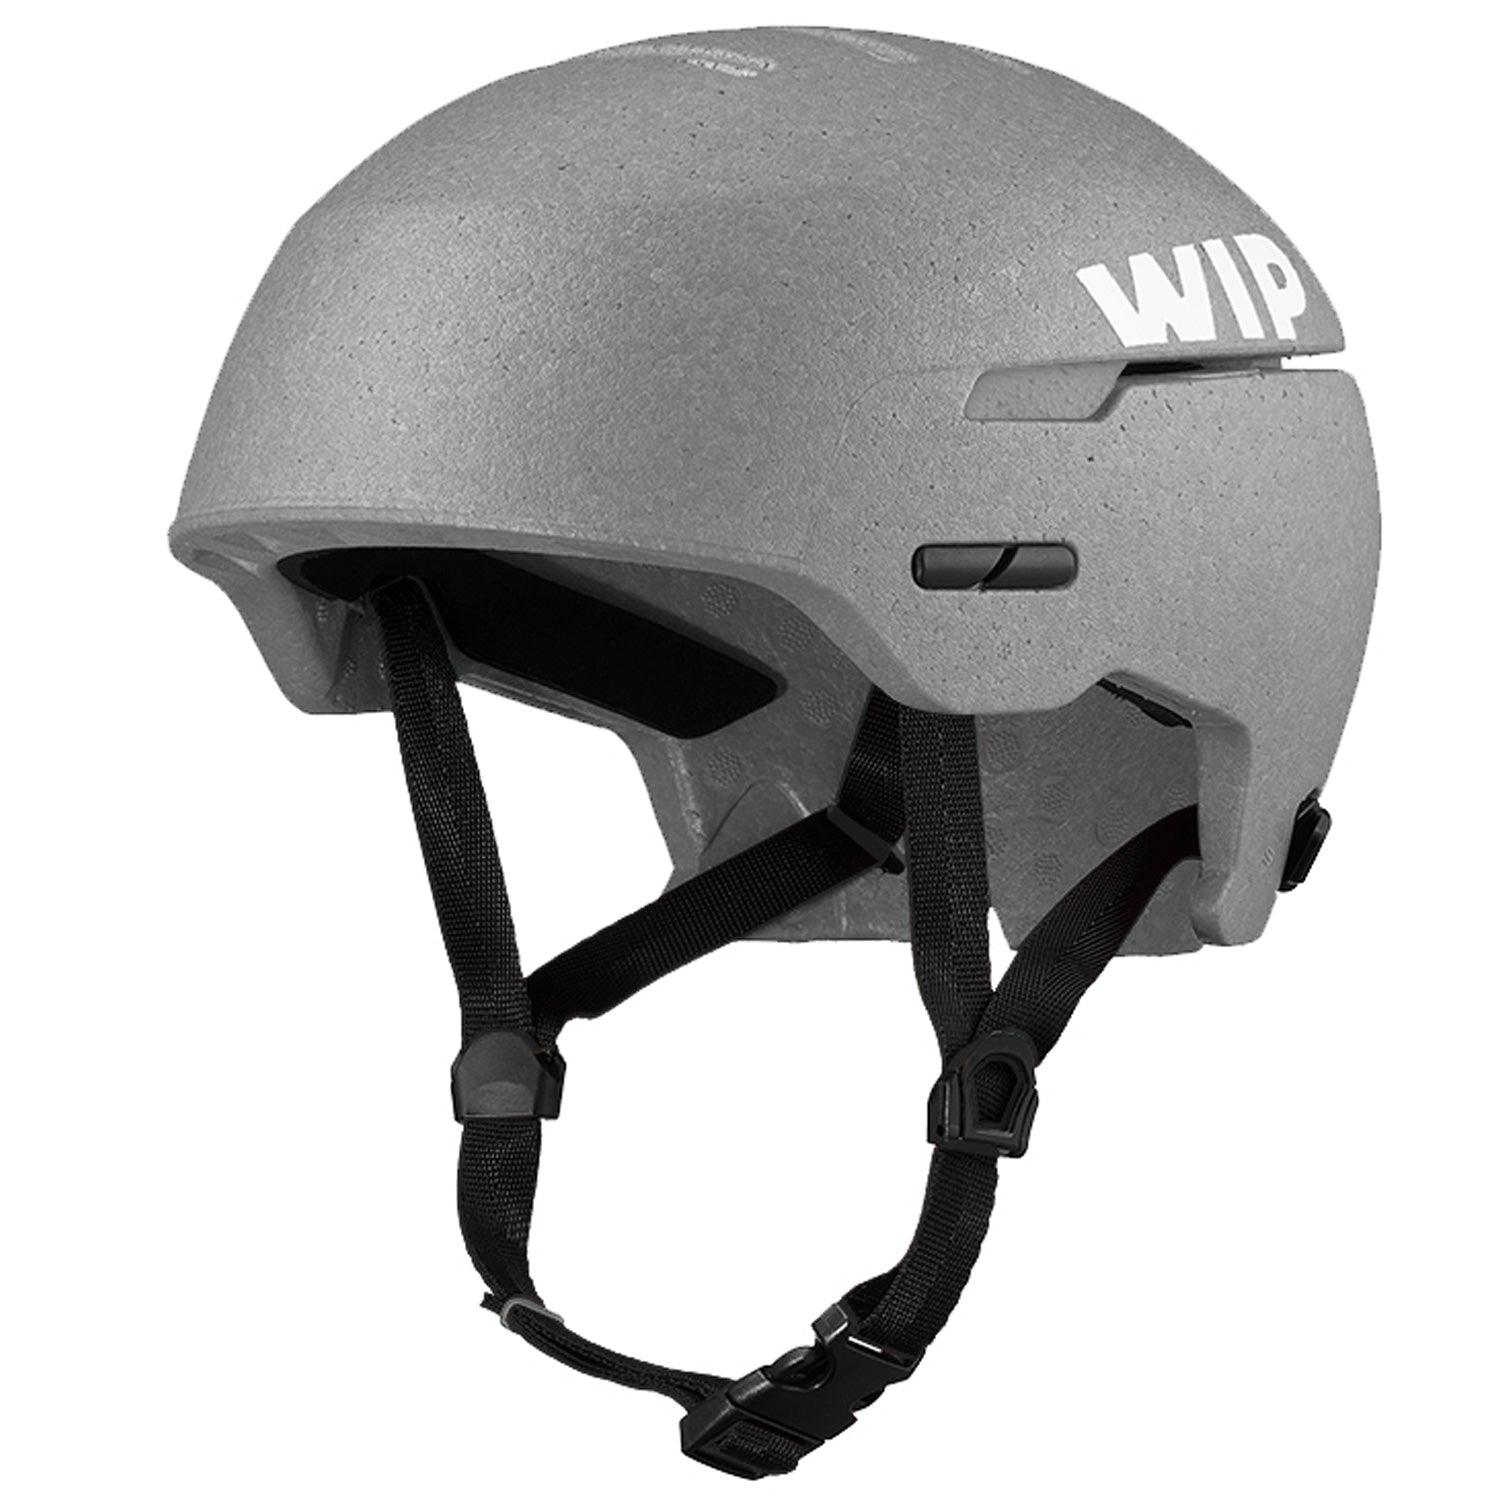 Forward WIP Wiflex Safety Helmet - Powerkiteshop